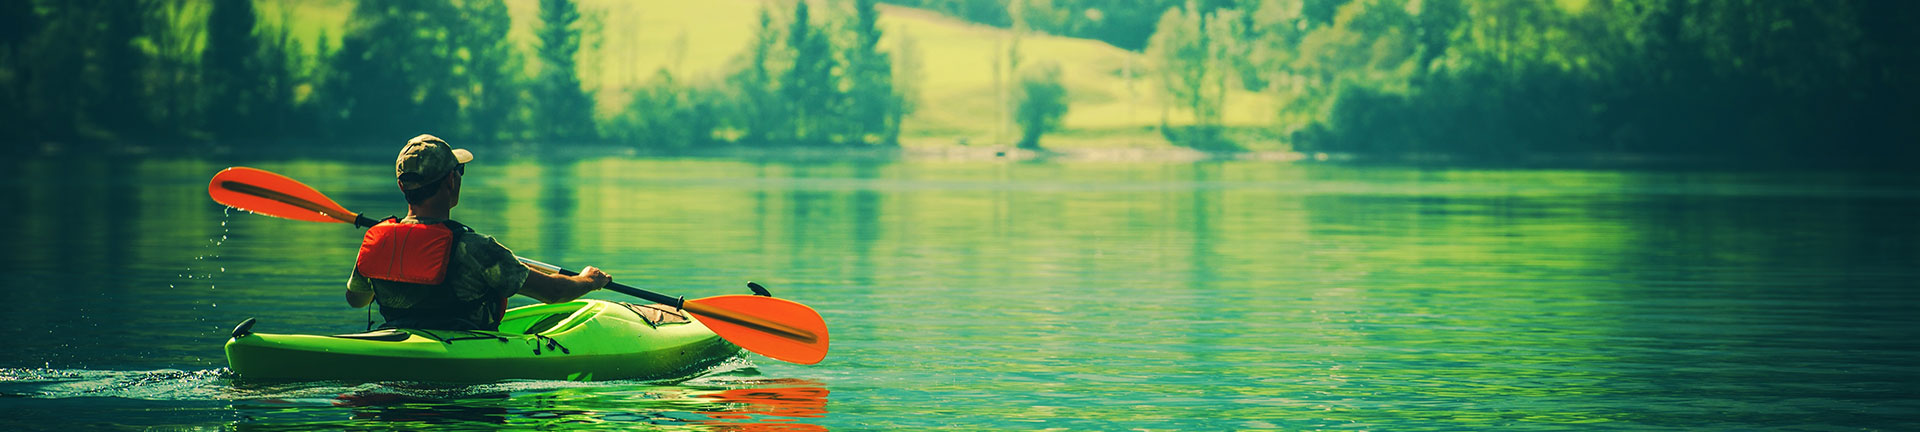 man relaxing paddling on water